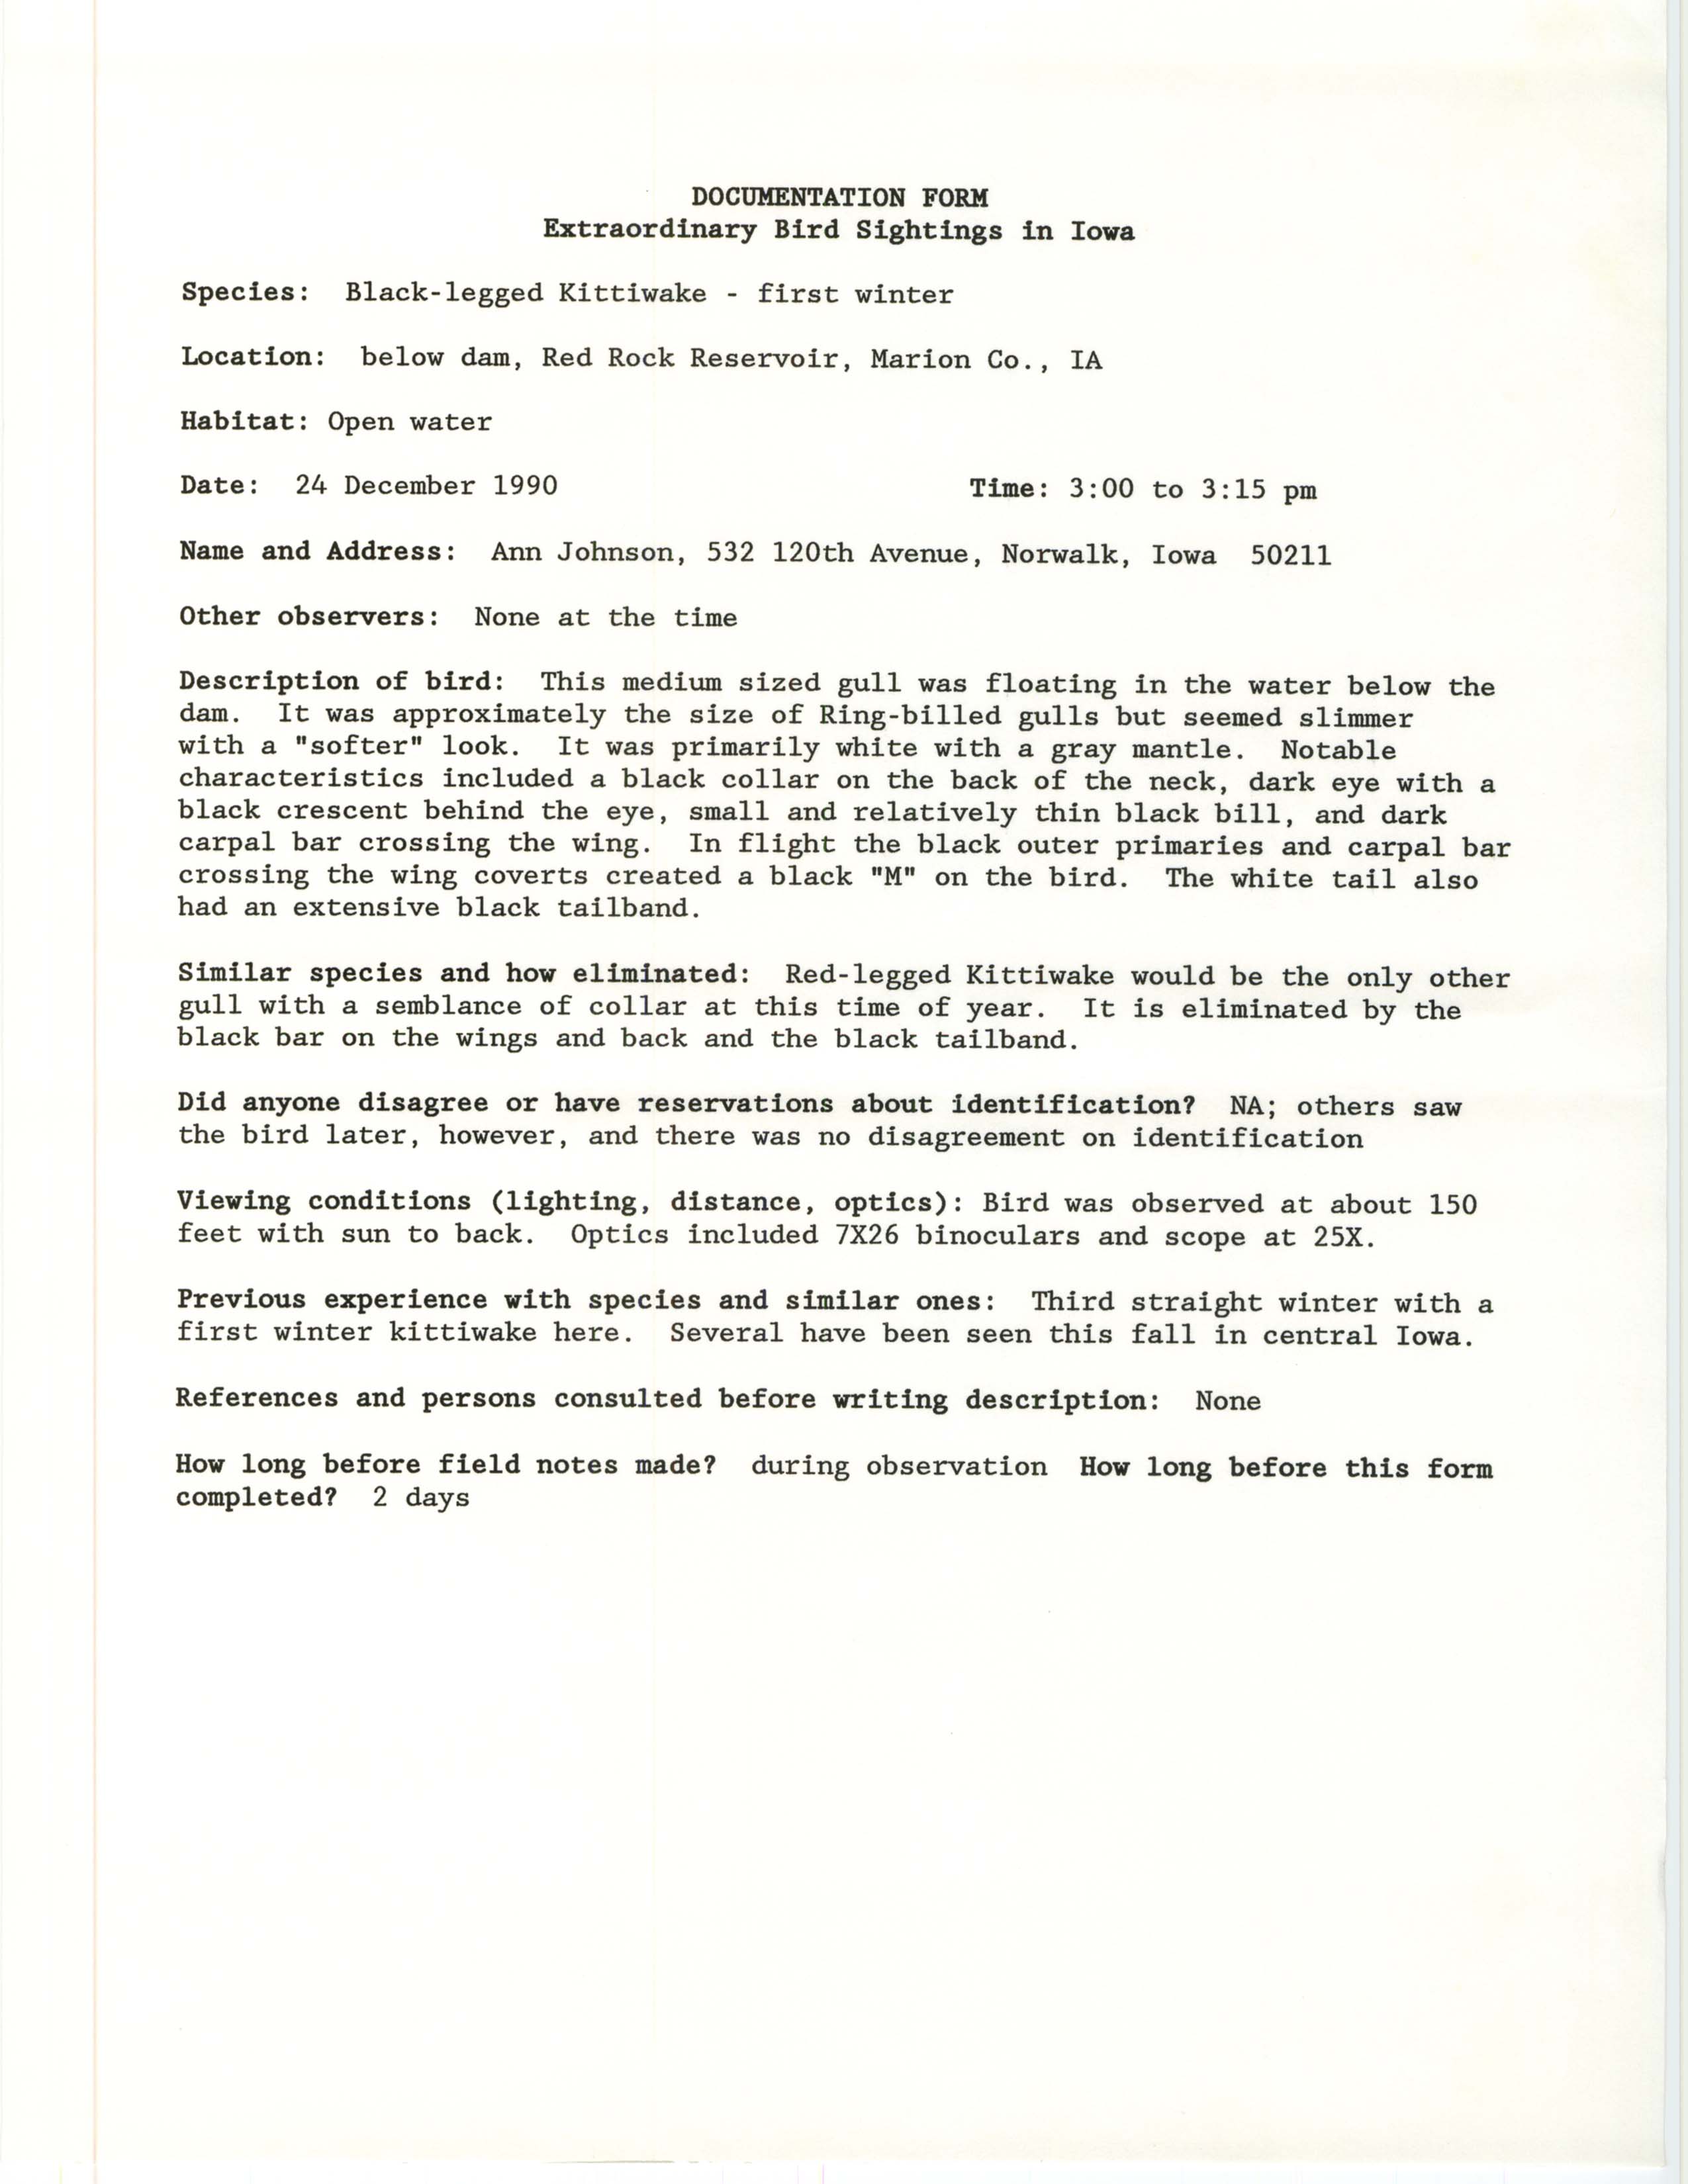 Rare bird documentation form for Black-legged Kittiwake at Red Rock Dam, 1990